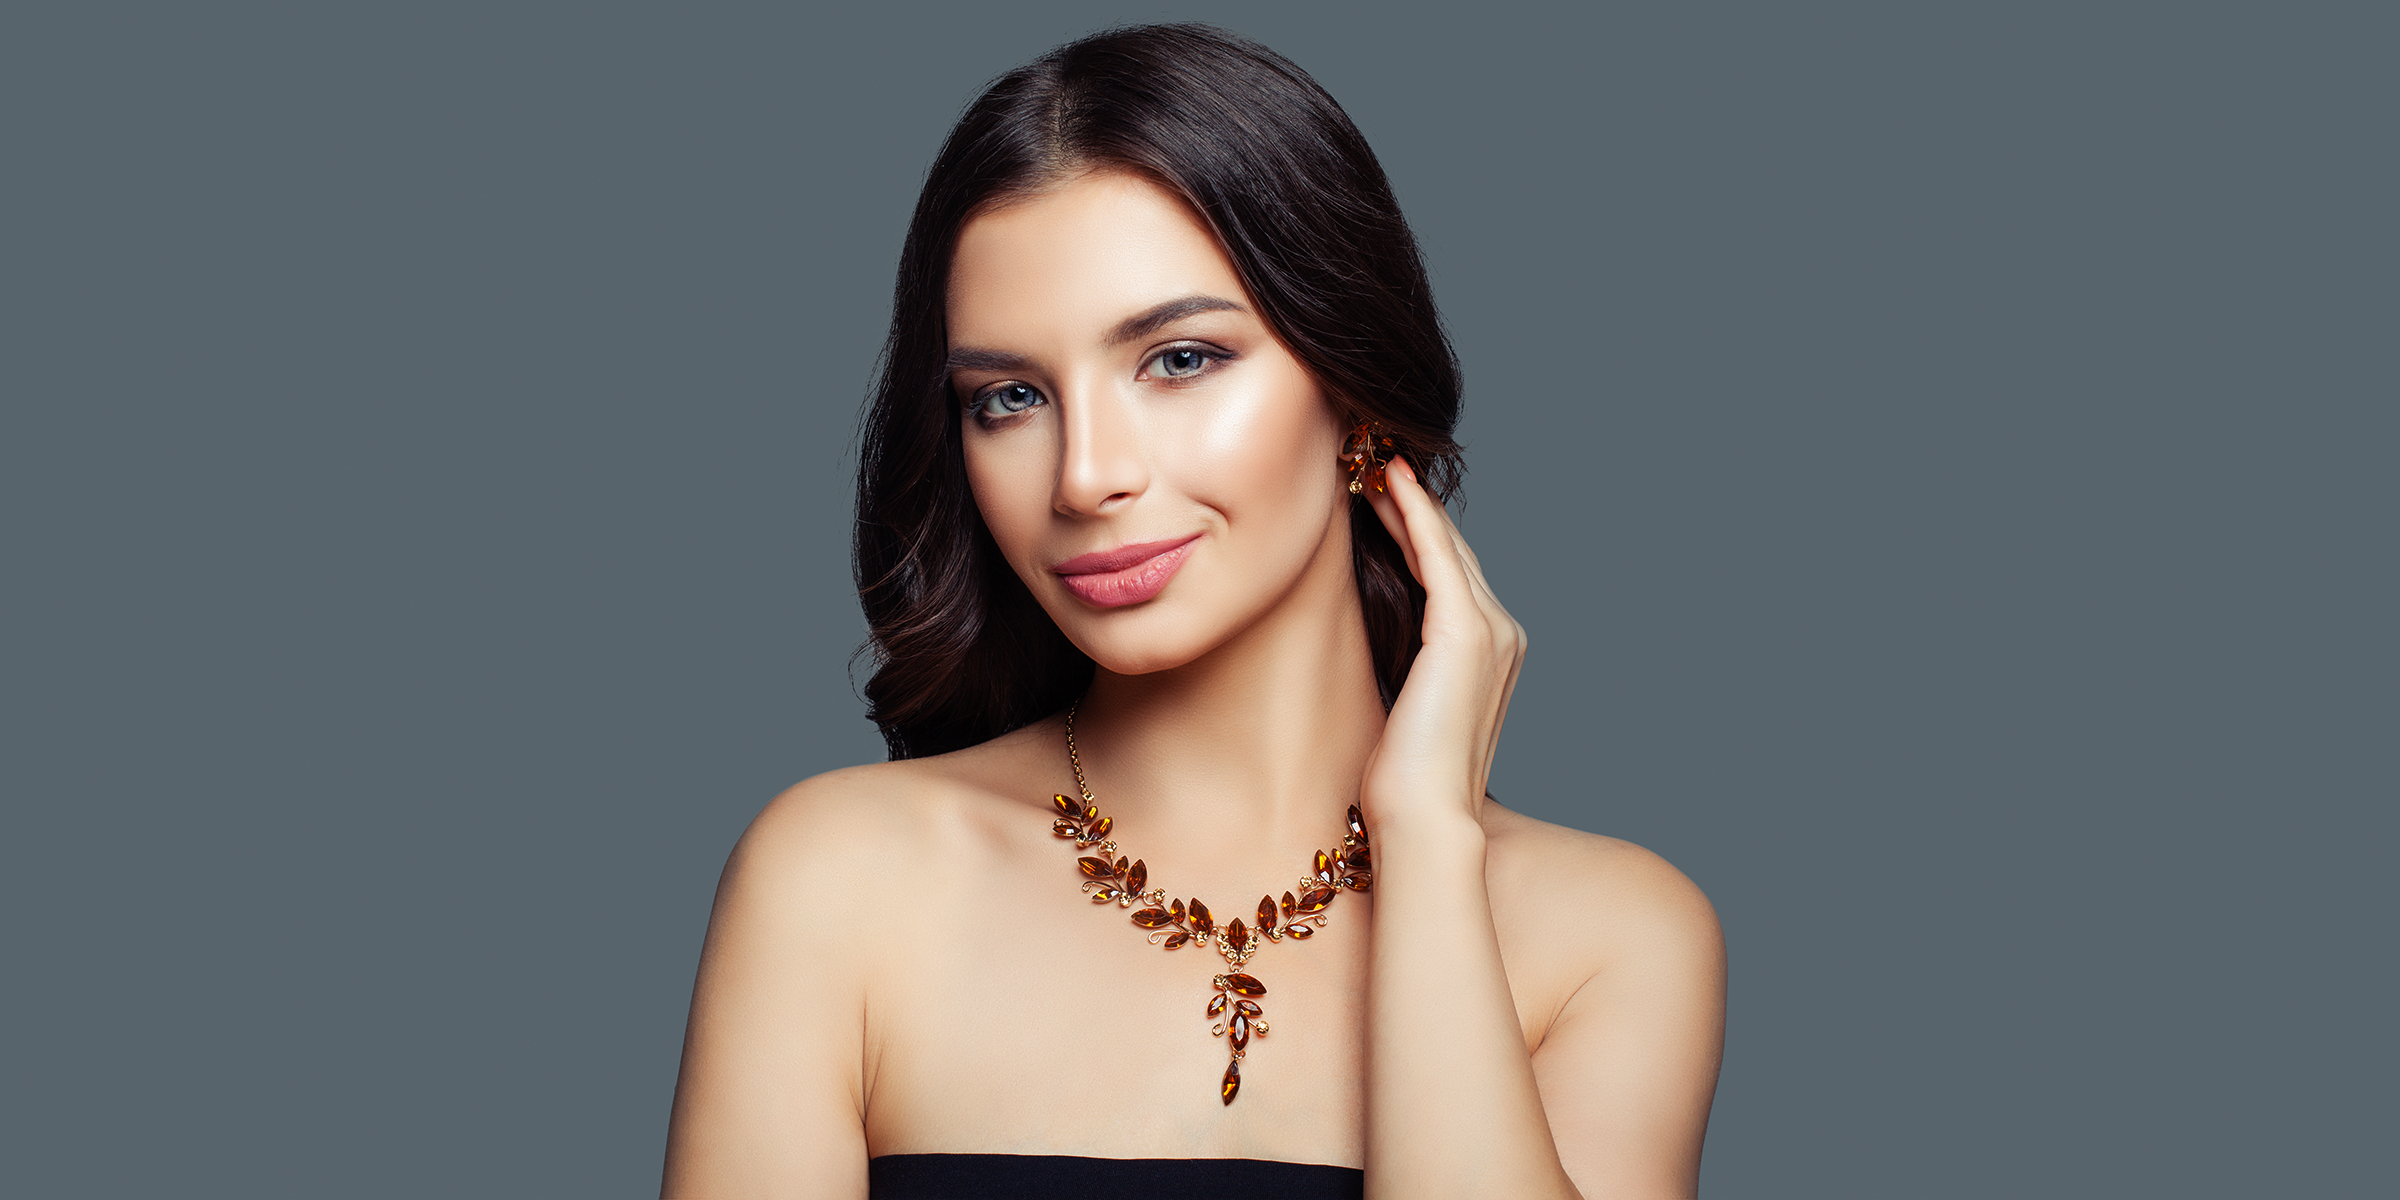 A woman wearing an amber necklace | Source: Shutterstock